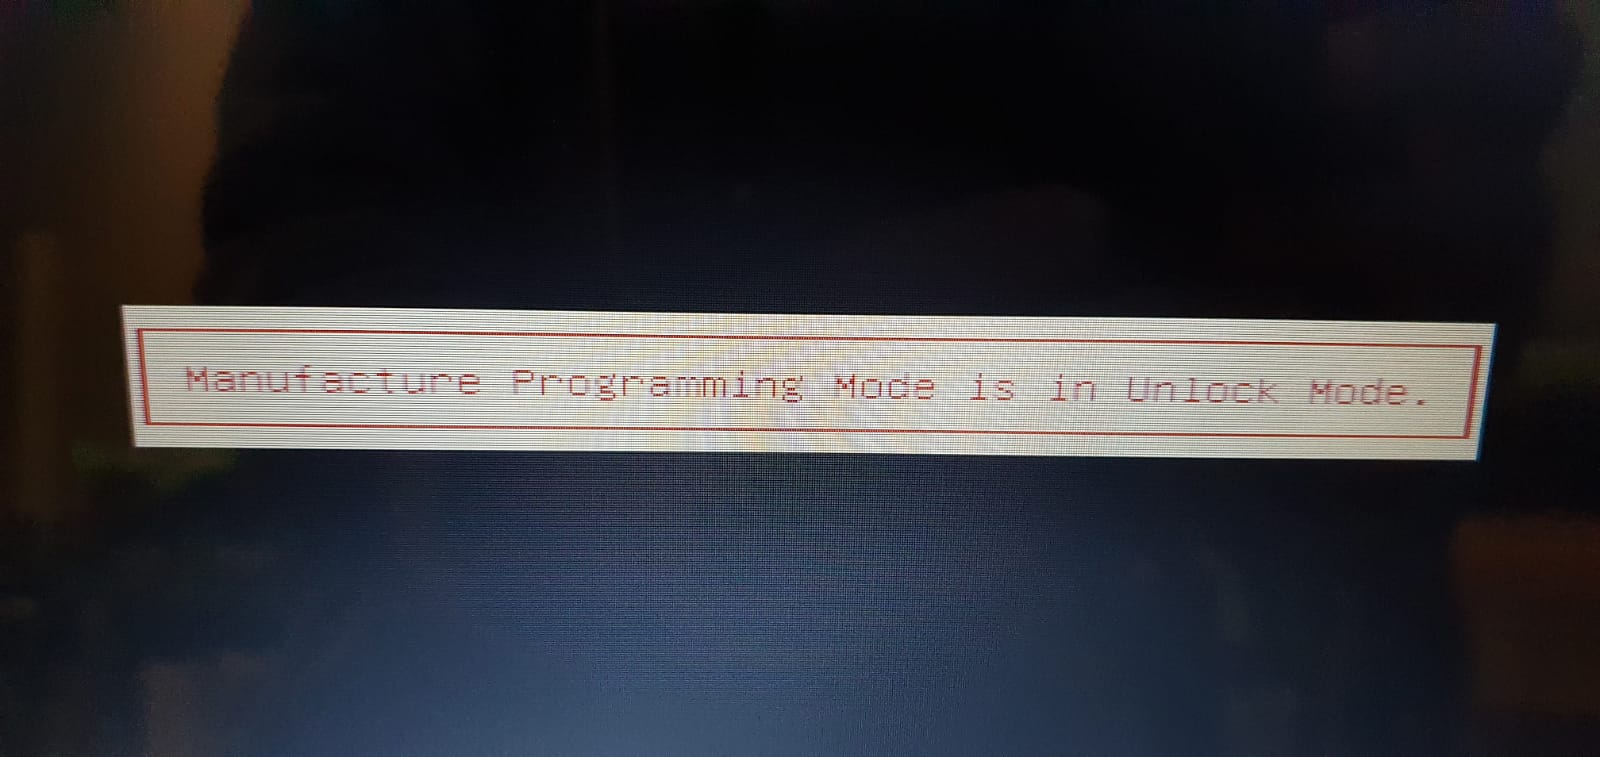 Manufacture Programming Mode is in Unlock Mode.jpeg